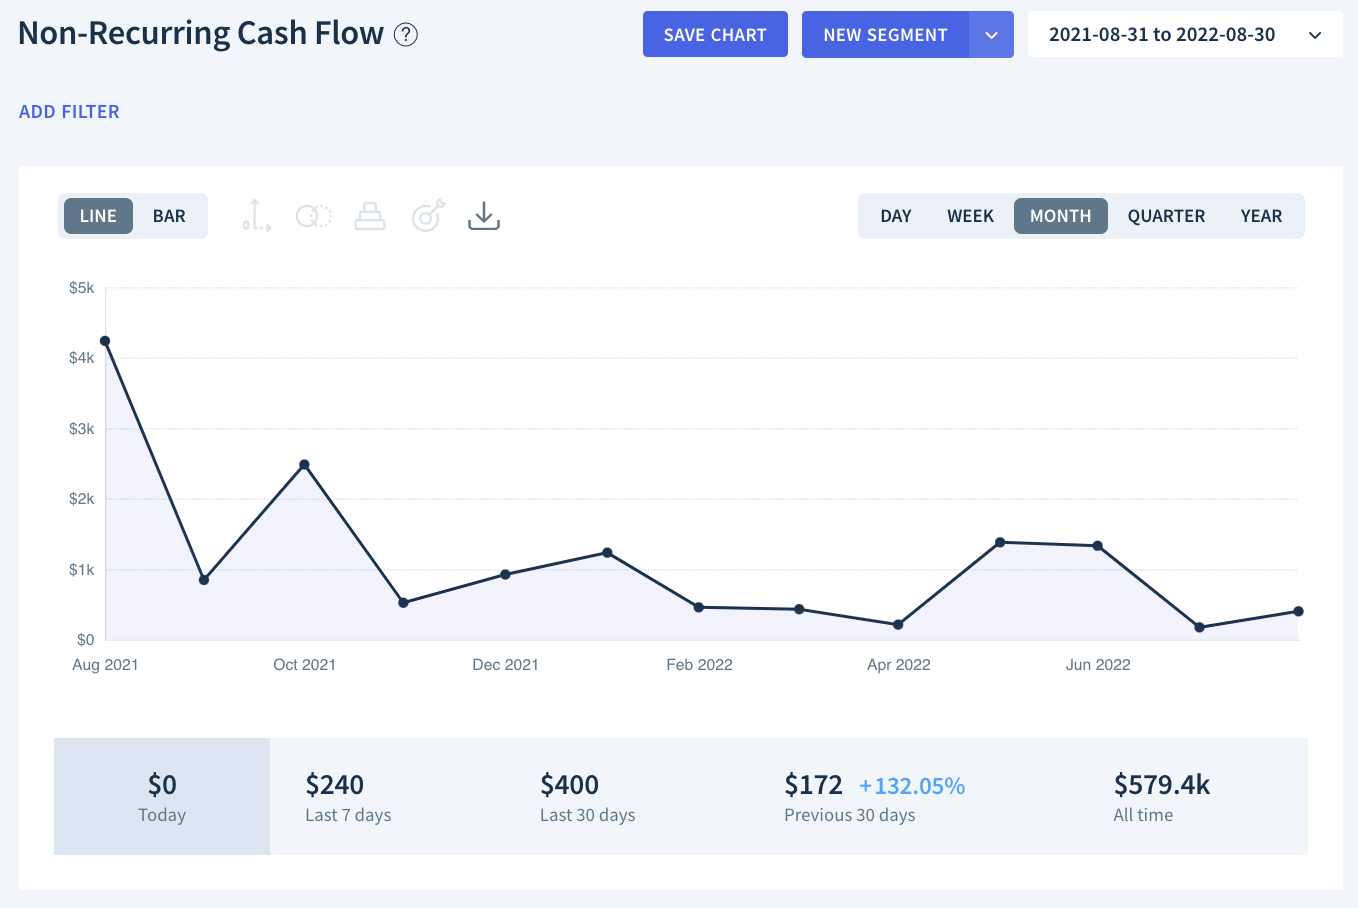 Non-Recurring Cash Flow chart